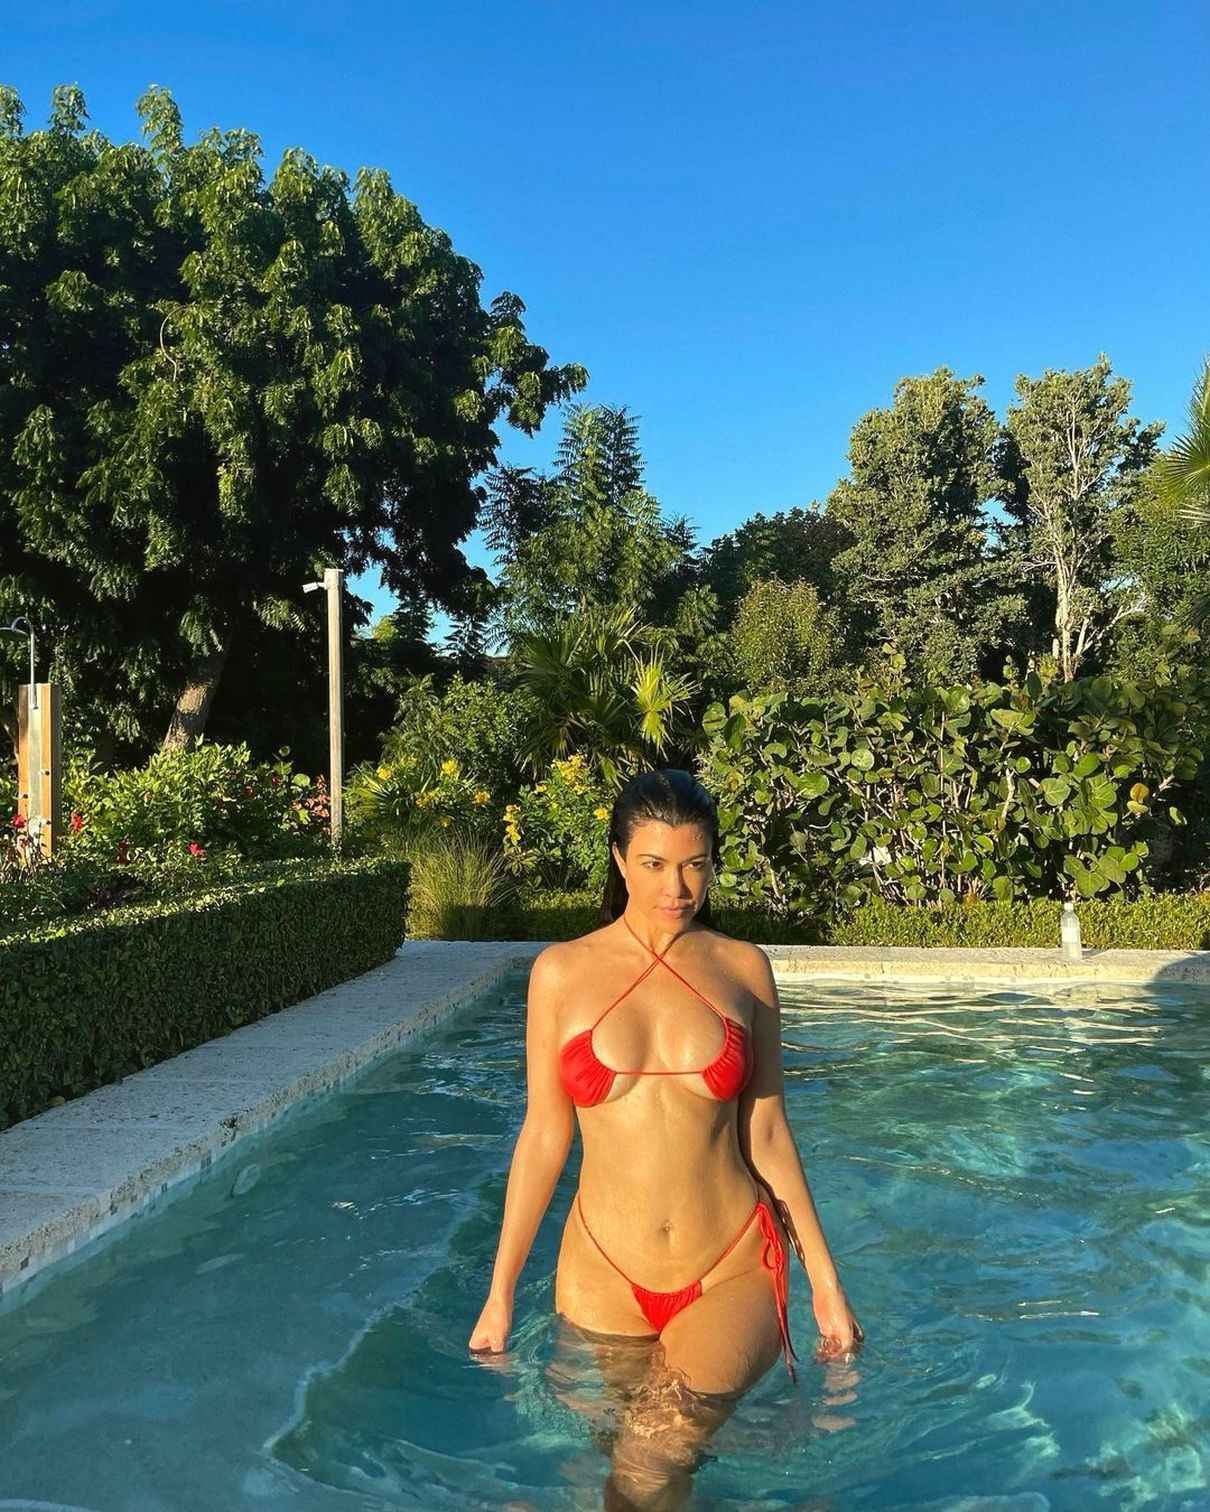 Kourtney Kardashian dans un mini bikini rouge